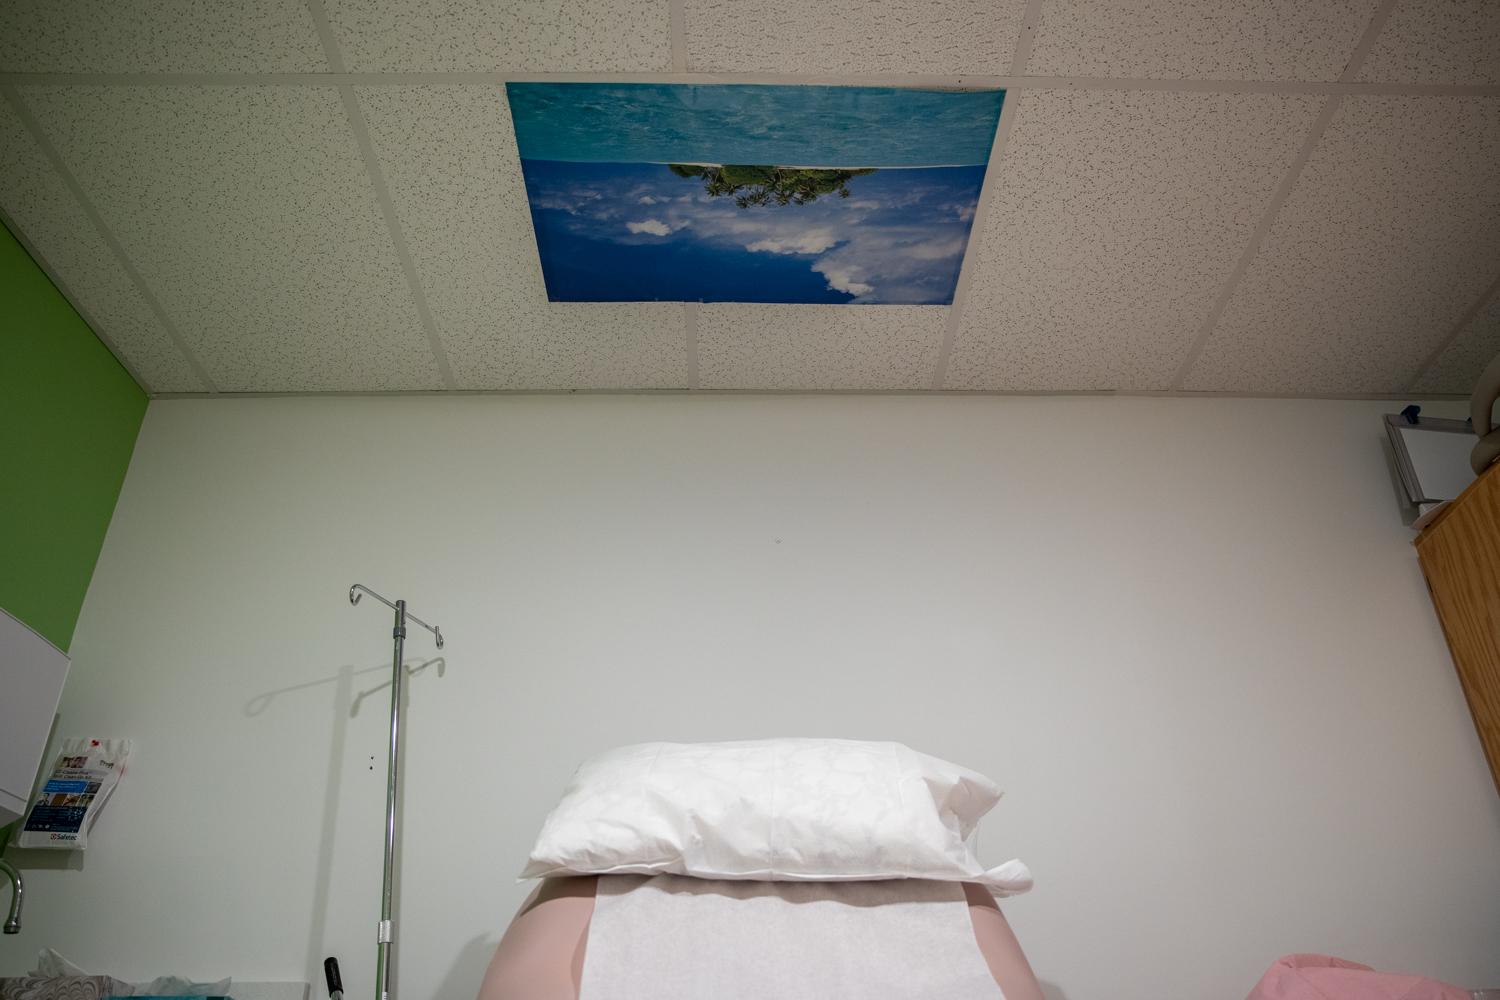 Room ready for abortion procedu...gton Post) Bangor United States